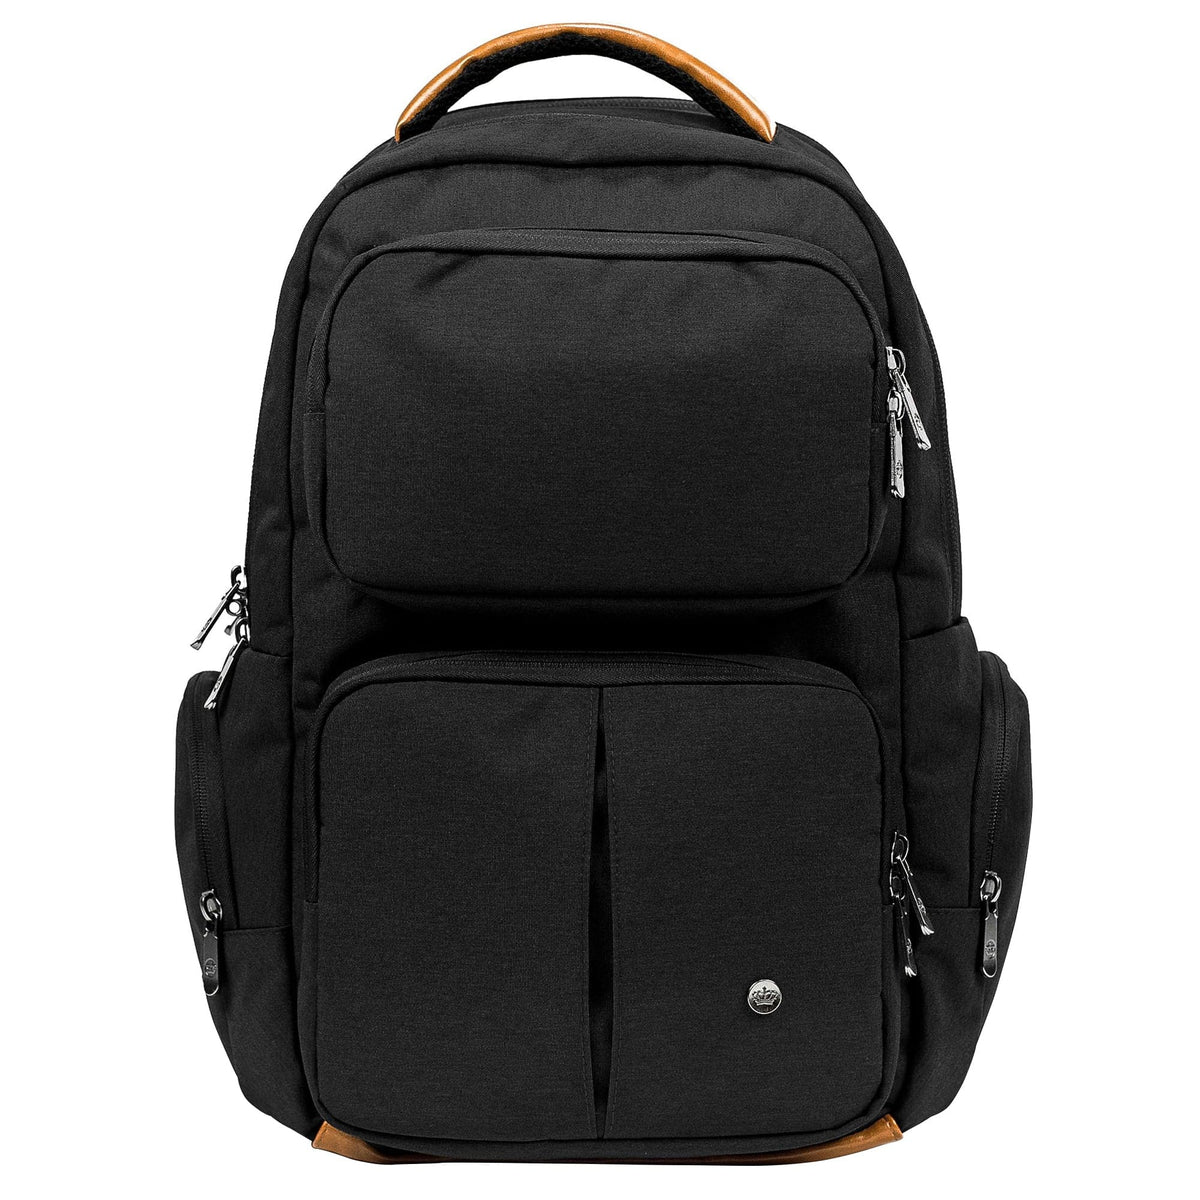 PKG Aurora 16" Laptop Backpack